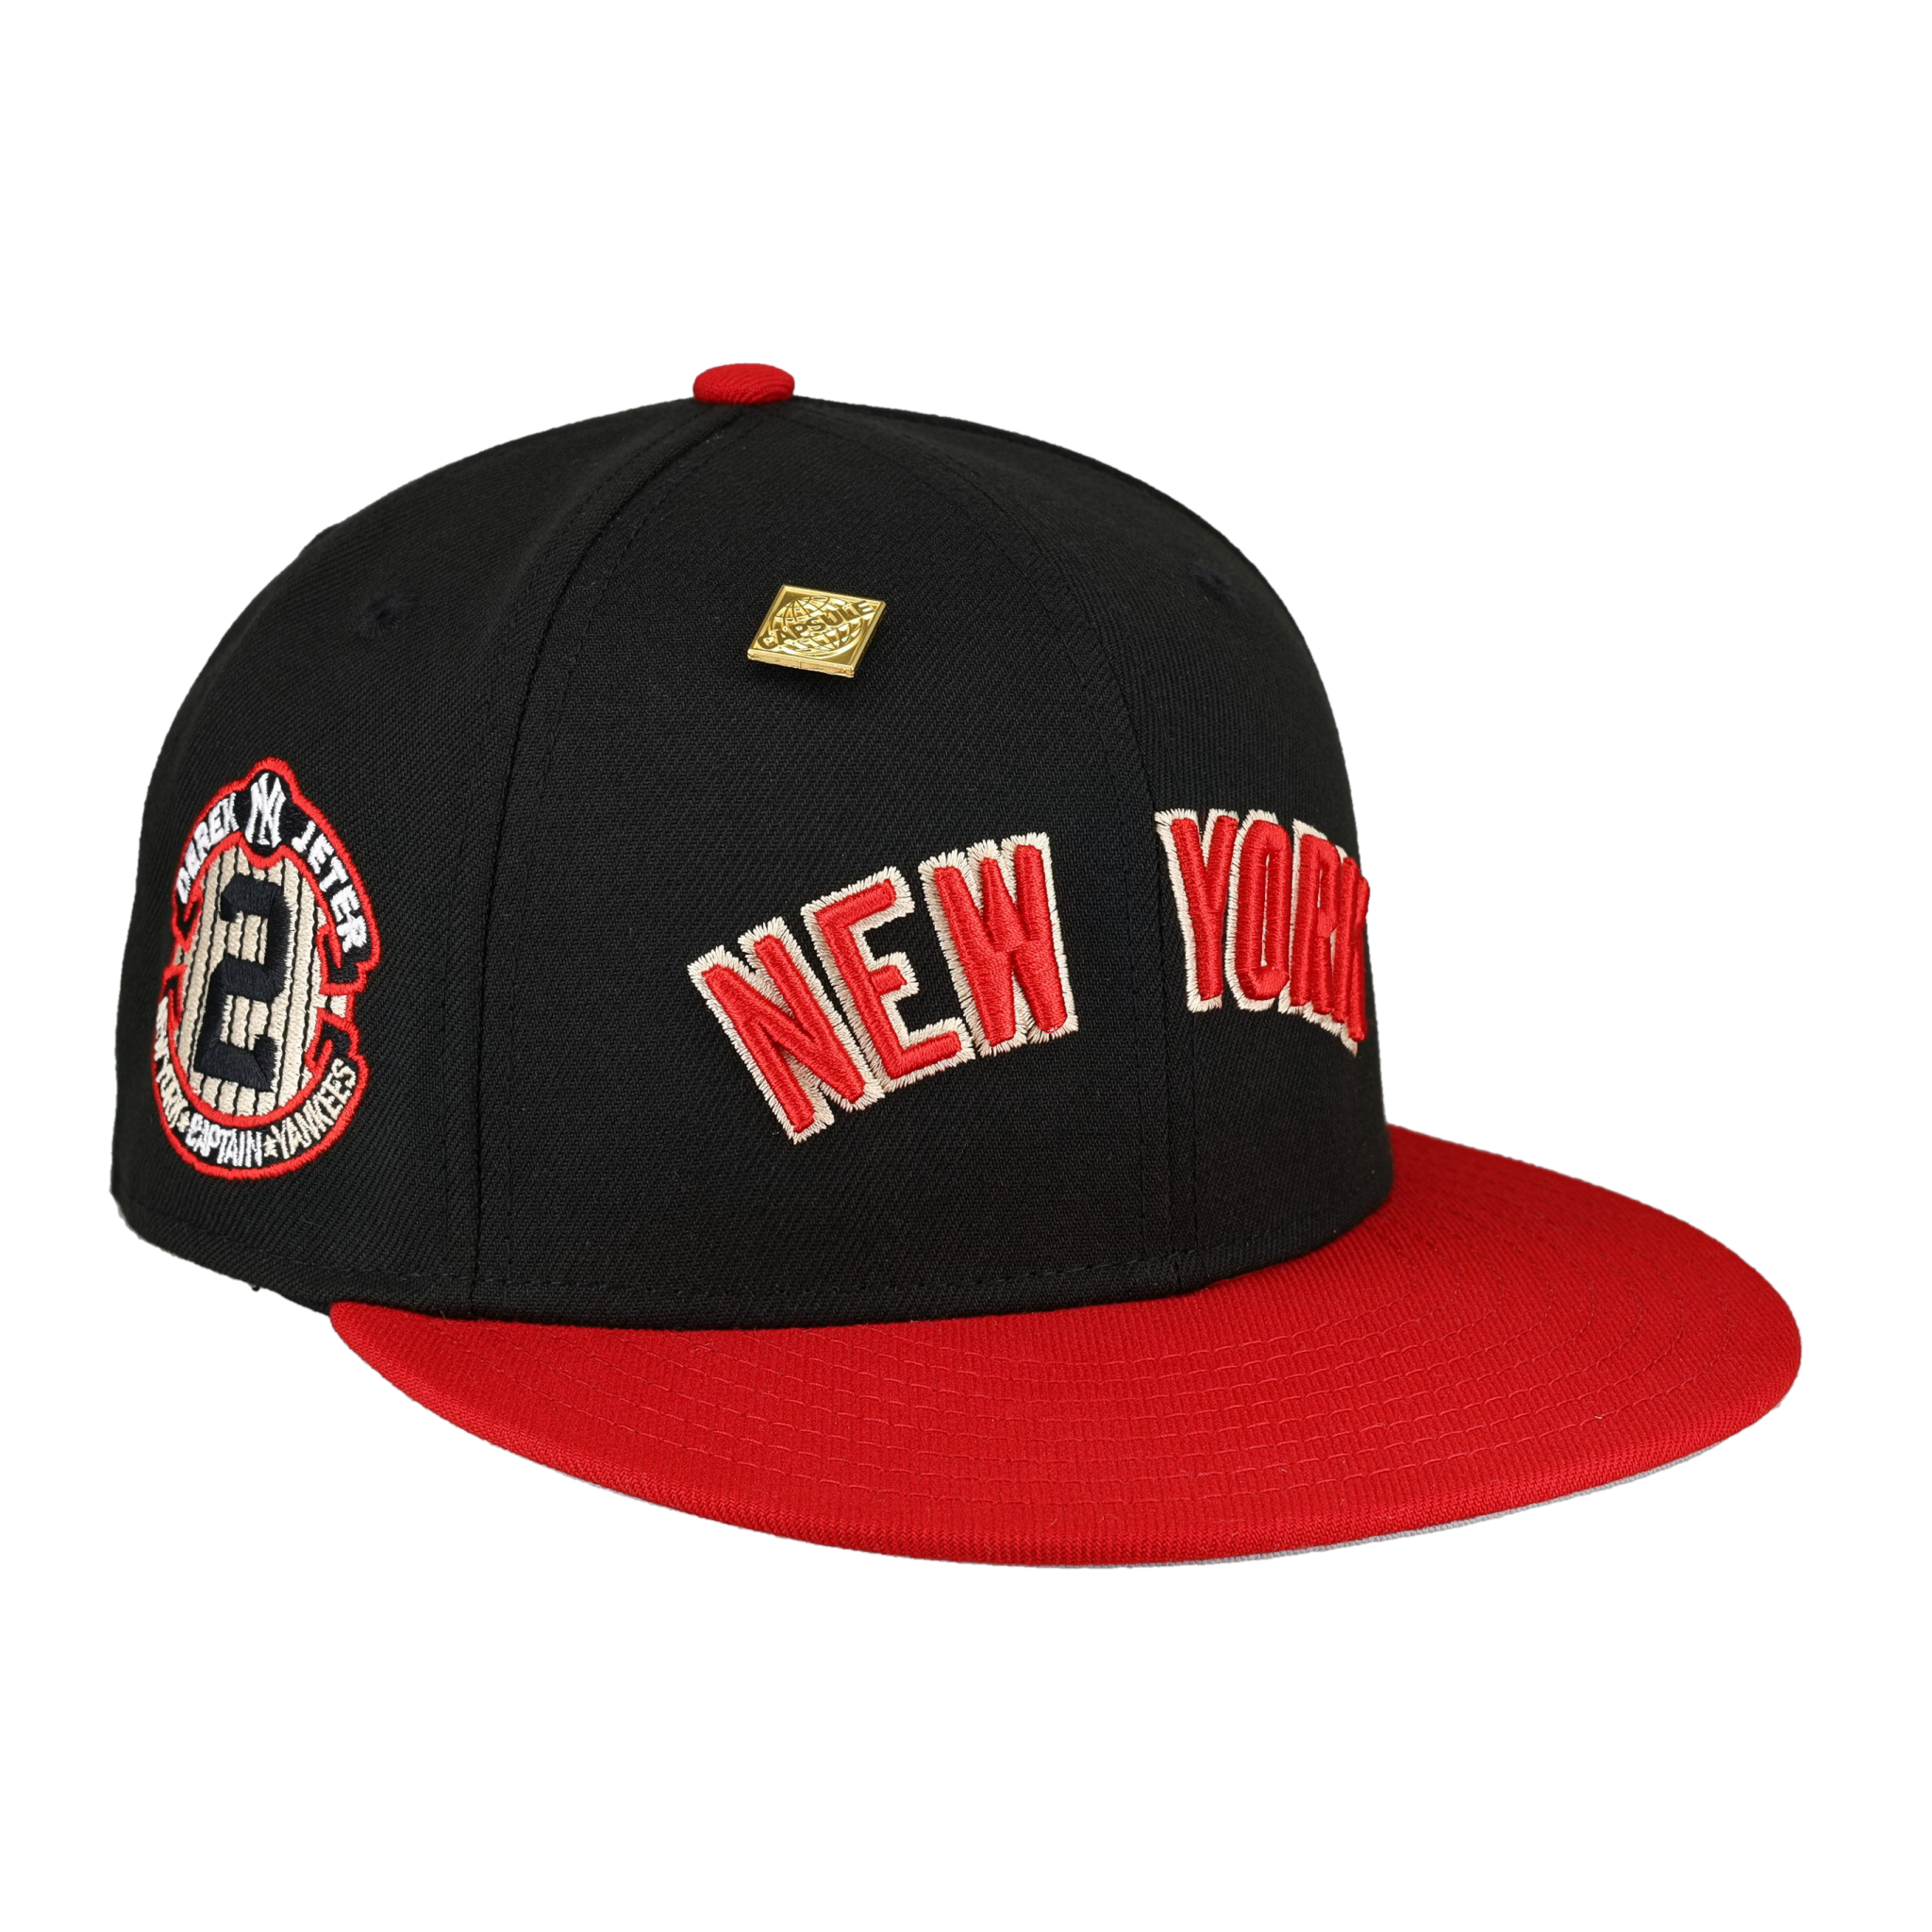 2008 MLB All Star Game Derek Jeter New York Yankees Stitched